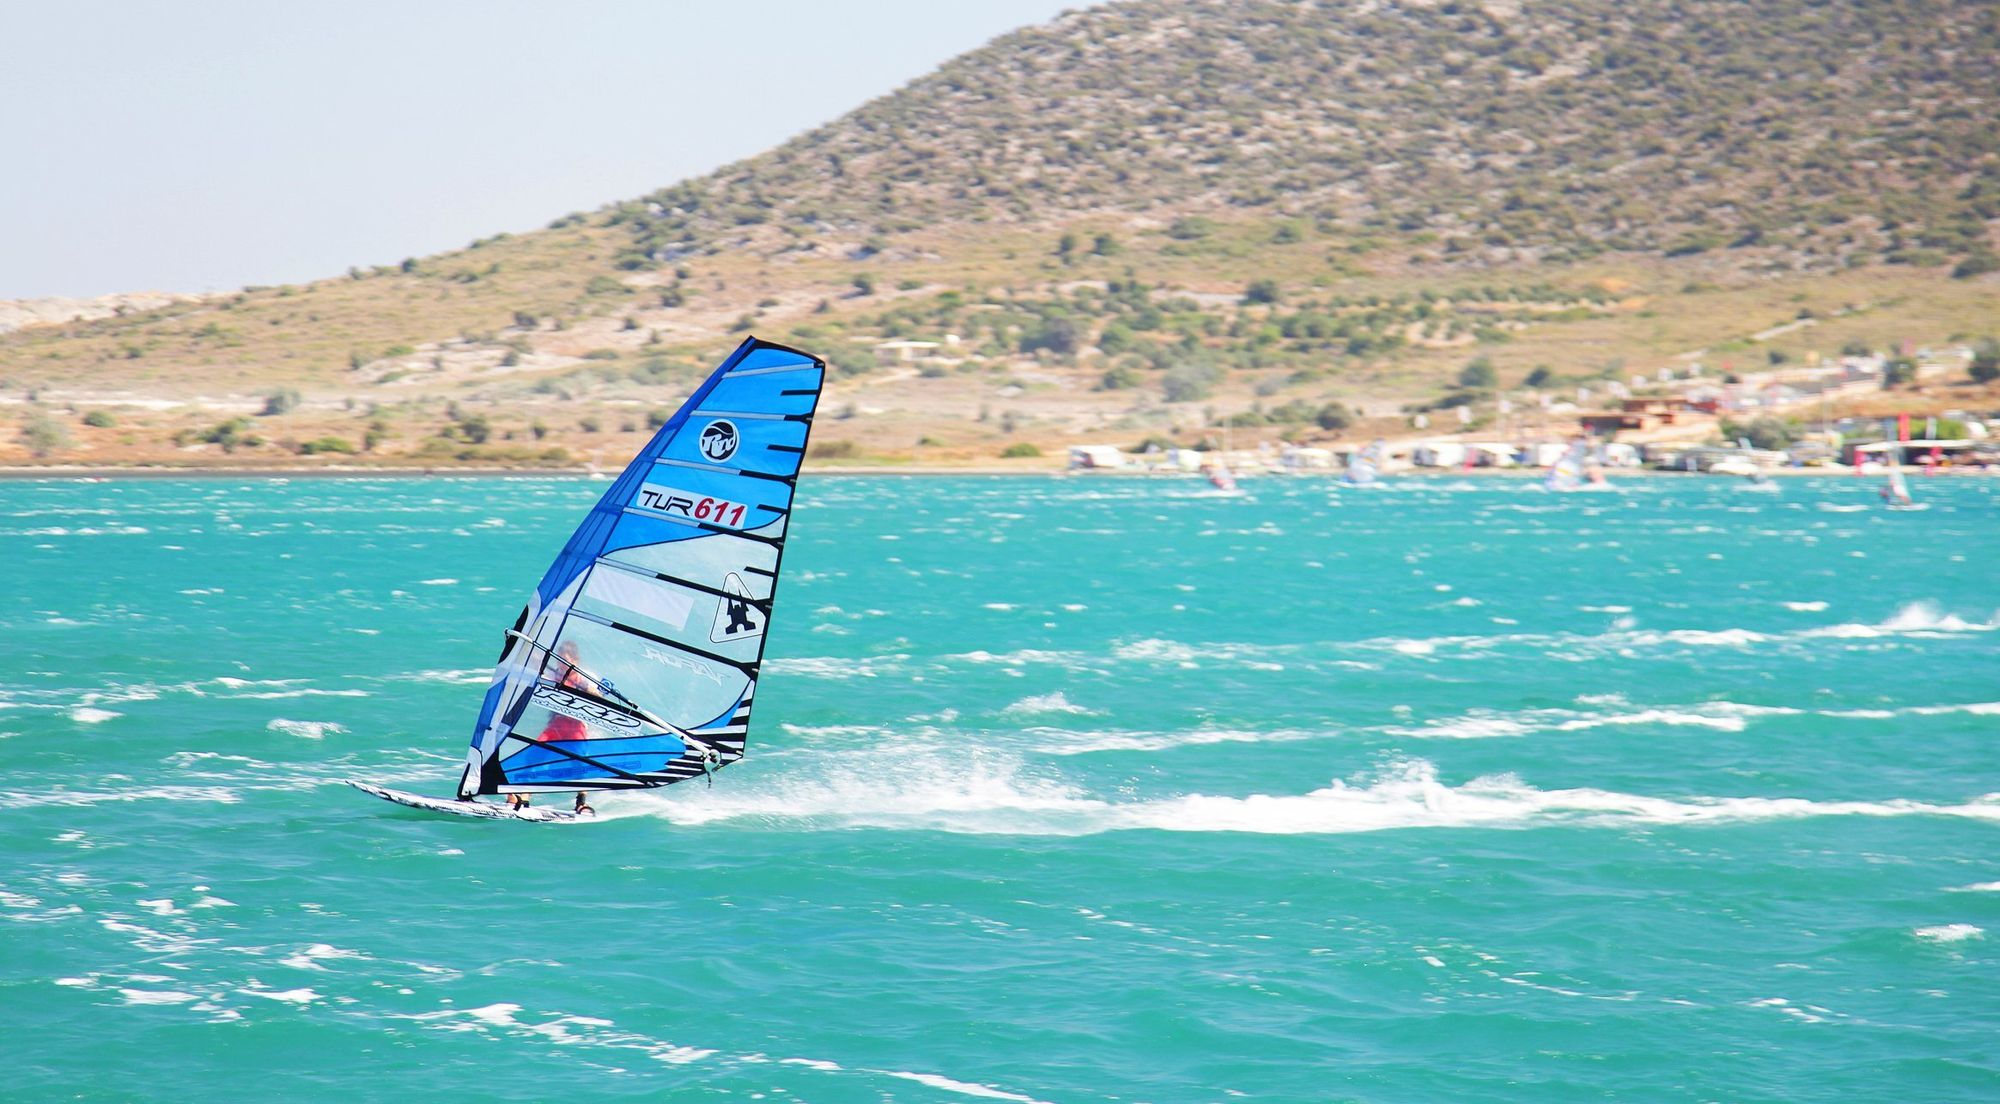 Alaçatı has been Turkey's top windsurfing destination for many years. (iStock Photo)